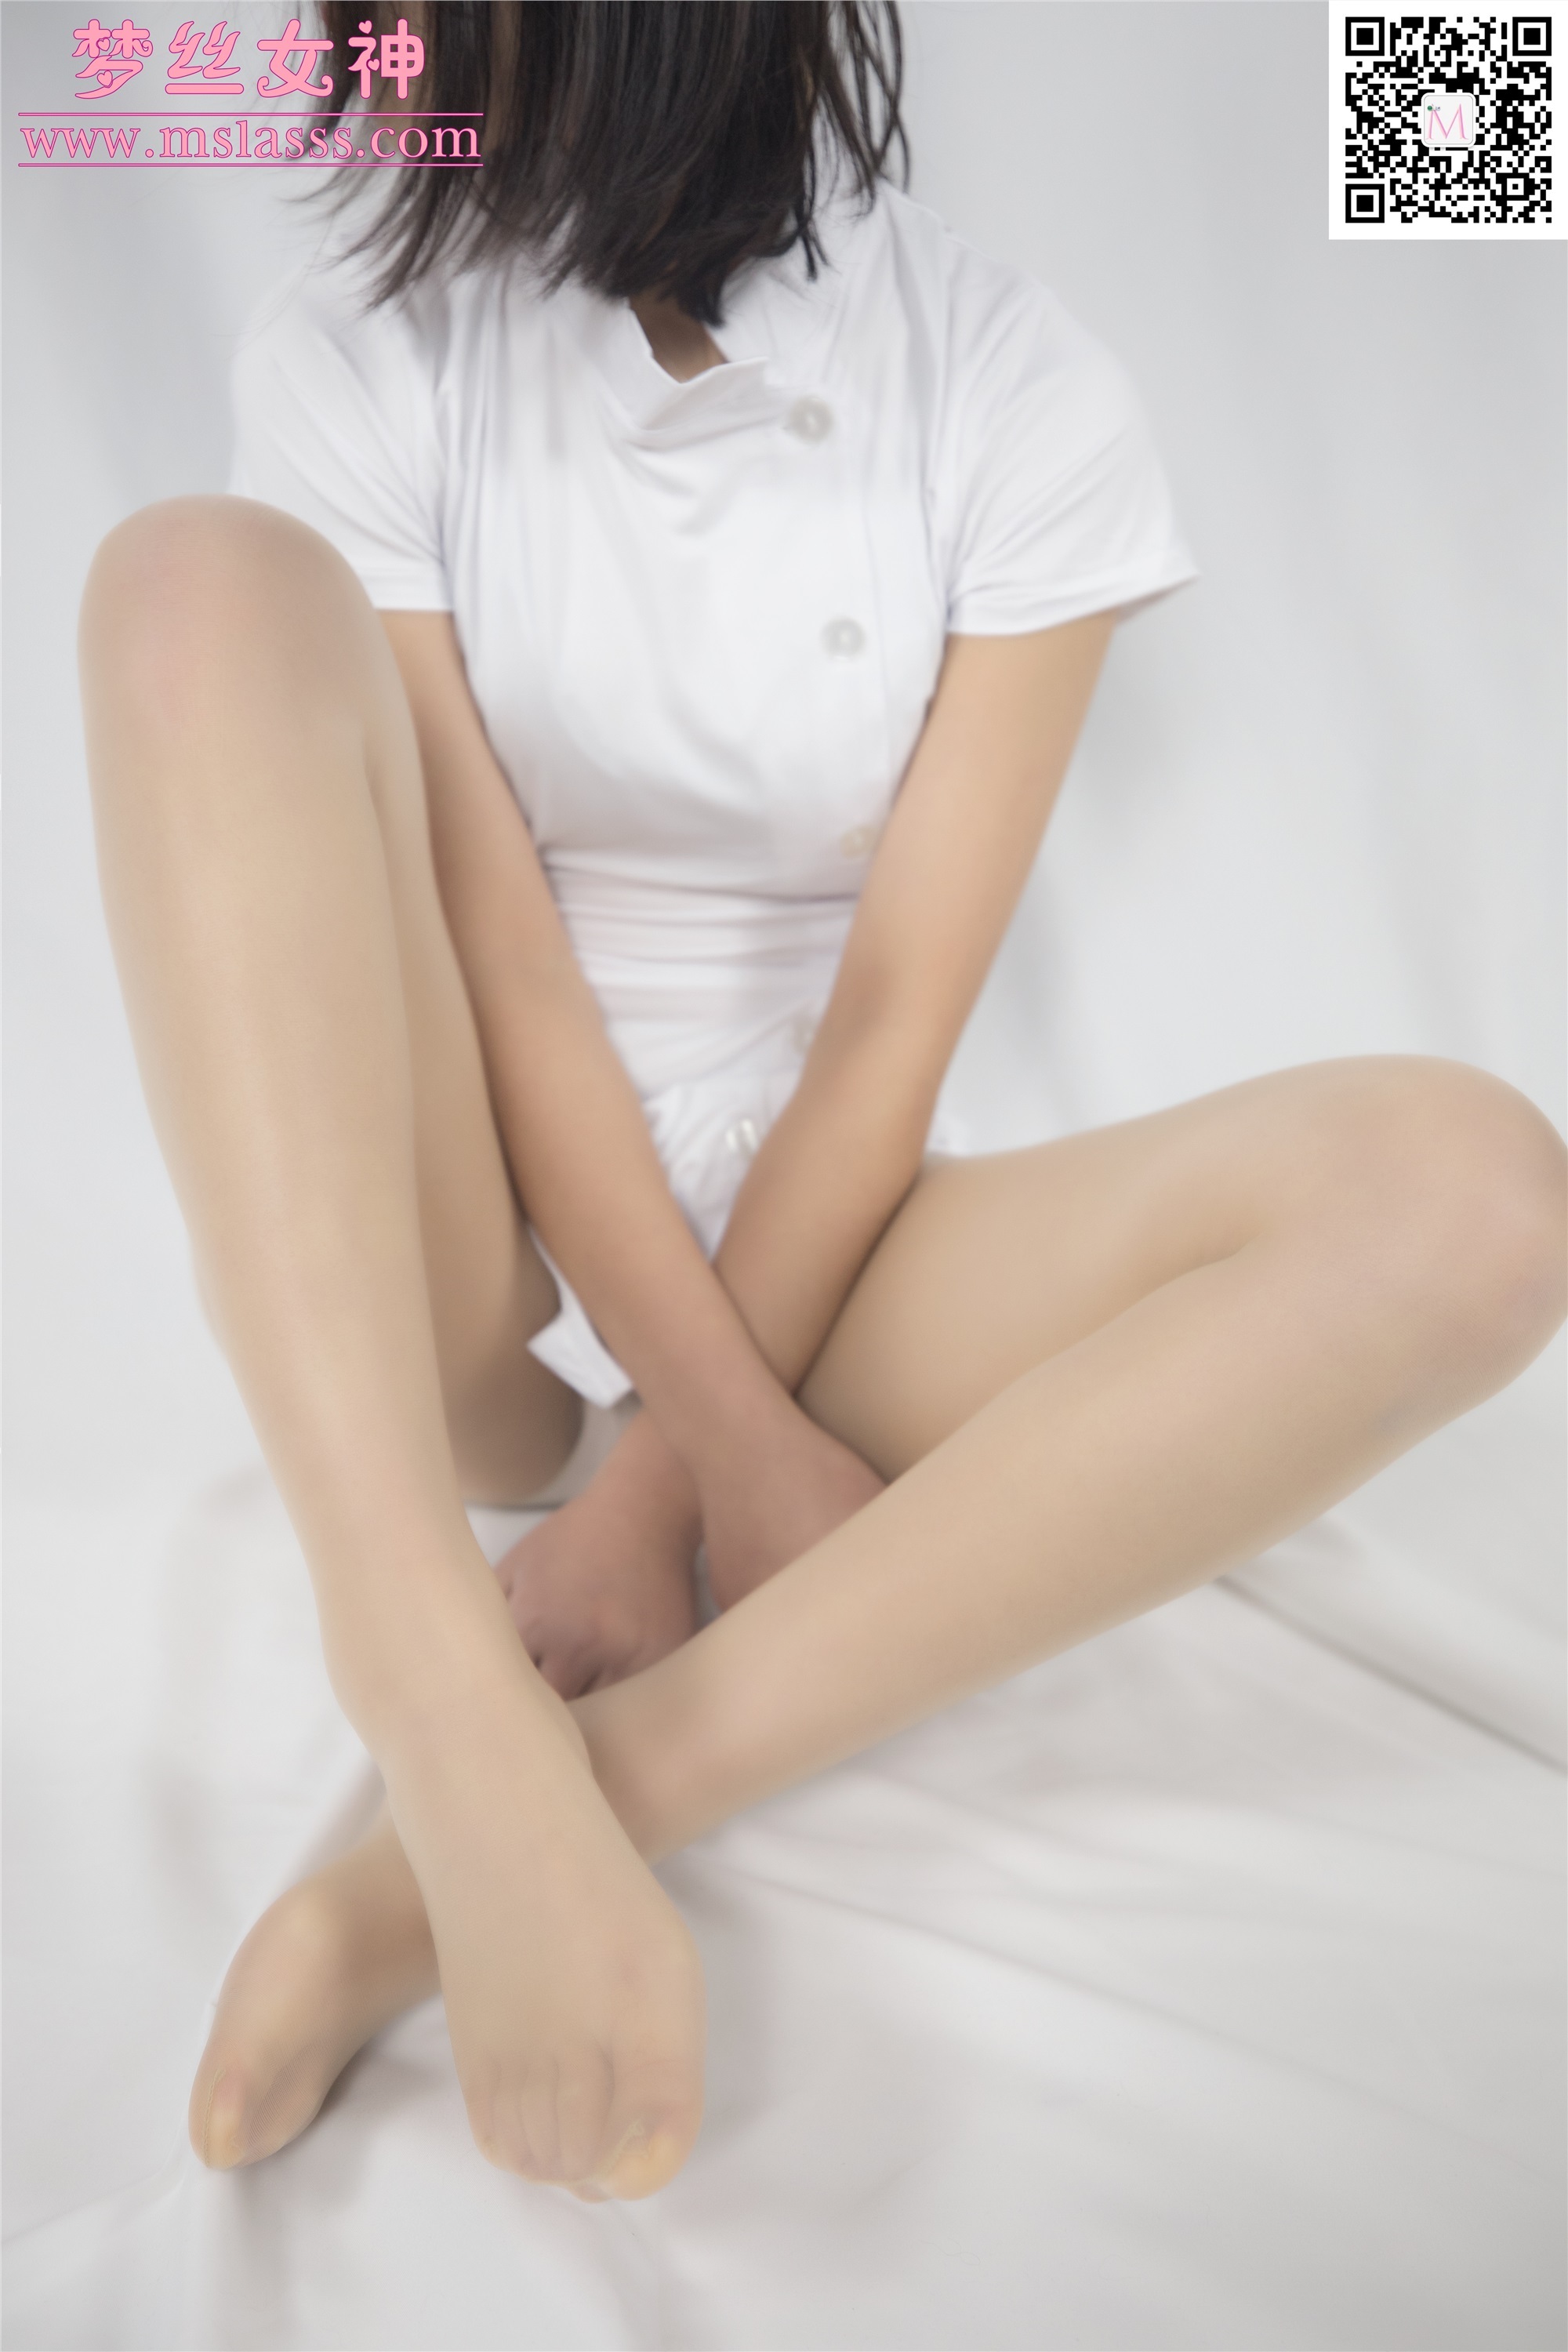 Mslass dream silk goddess 2020-01-21 vol.092 small private room of M-line pantyhose